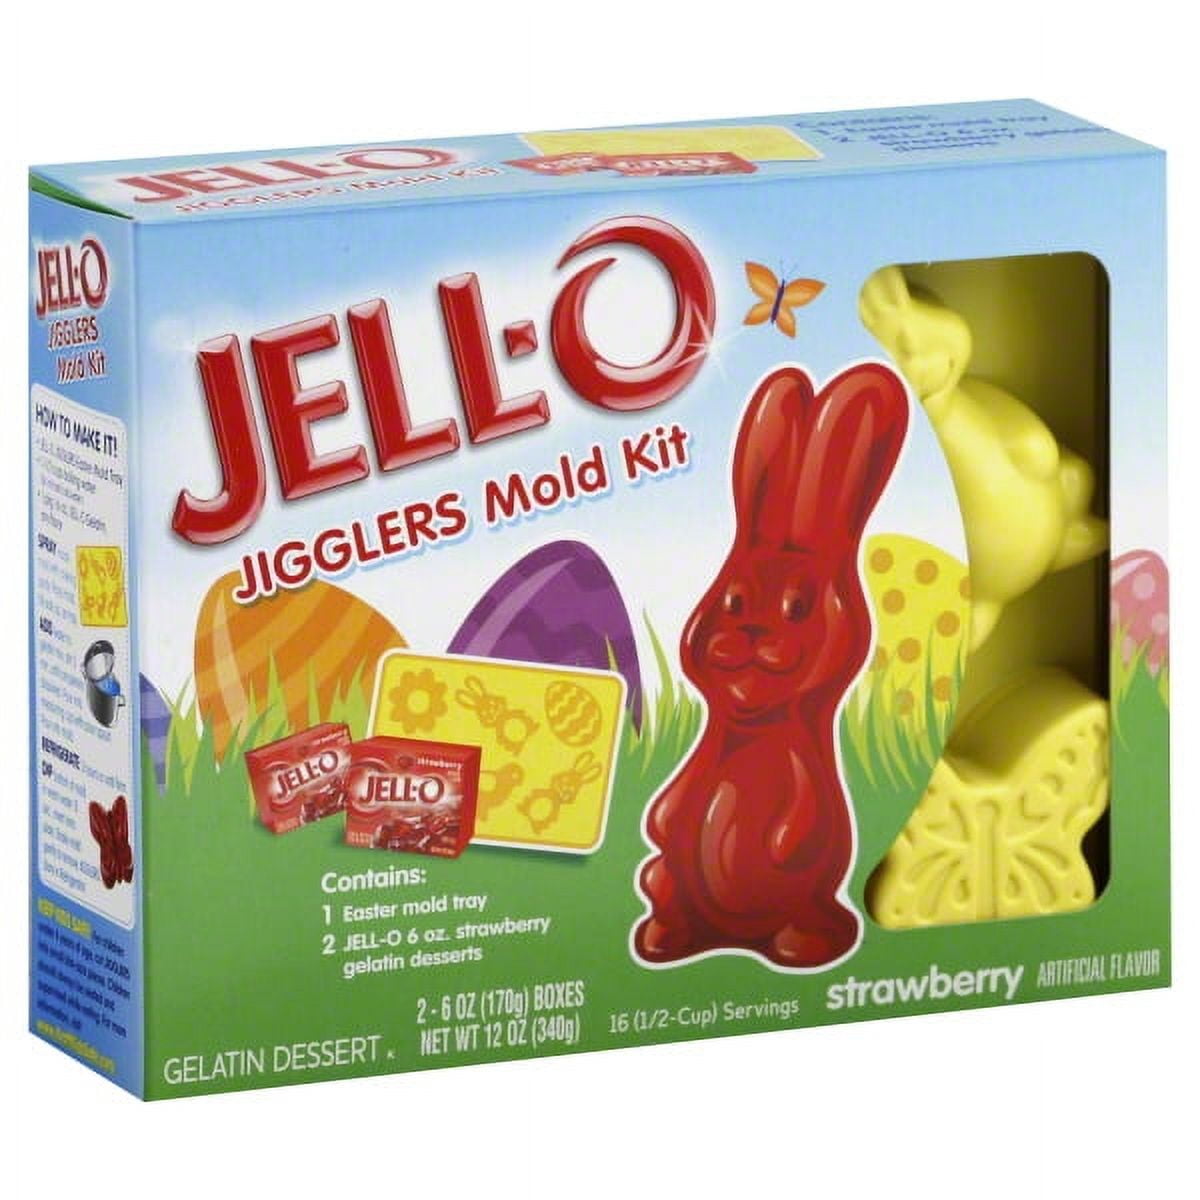 New Jell-o Jello Minions 2015 Jigglers Mold Kit - Lemon & Berry